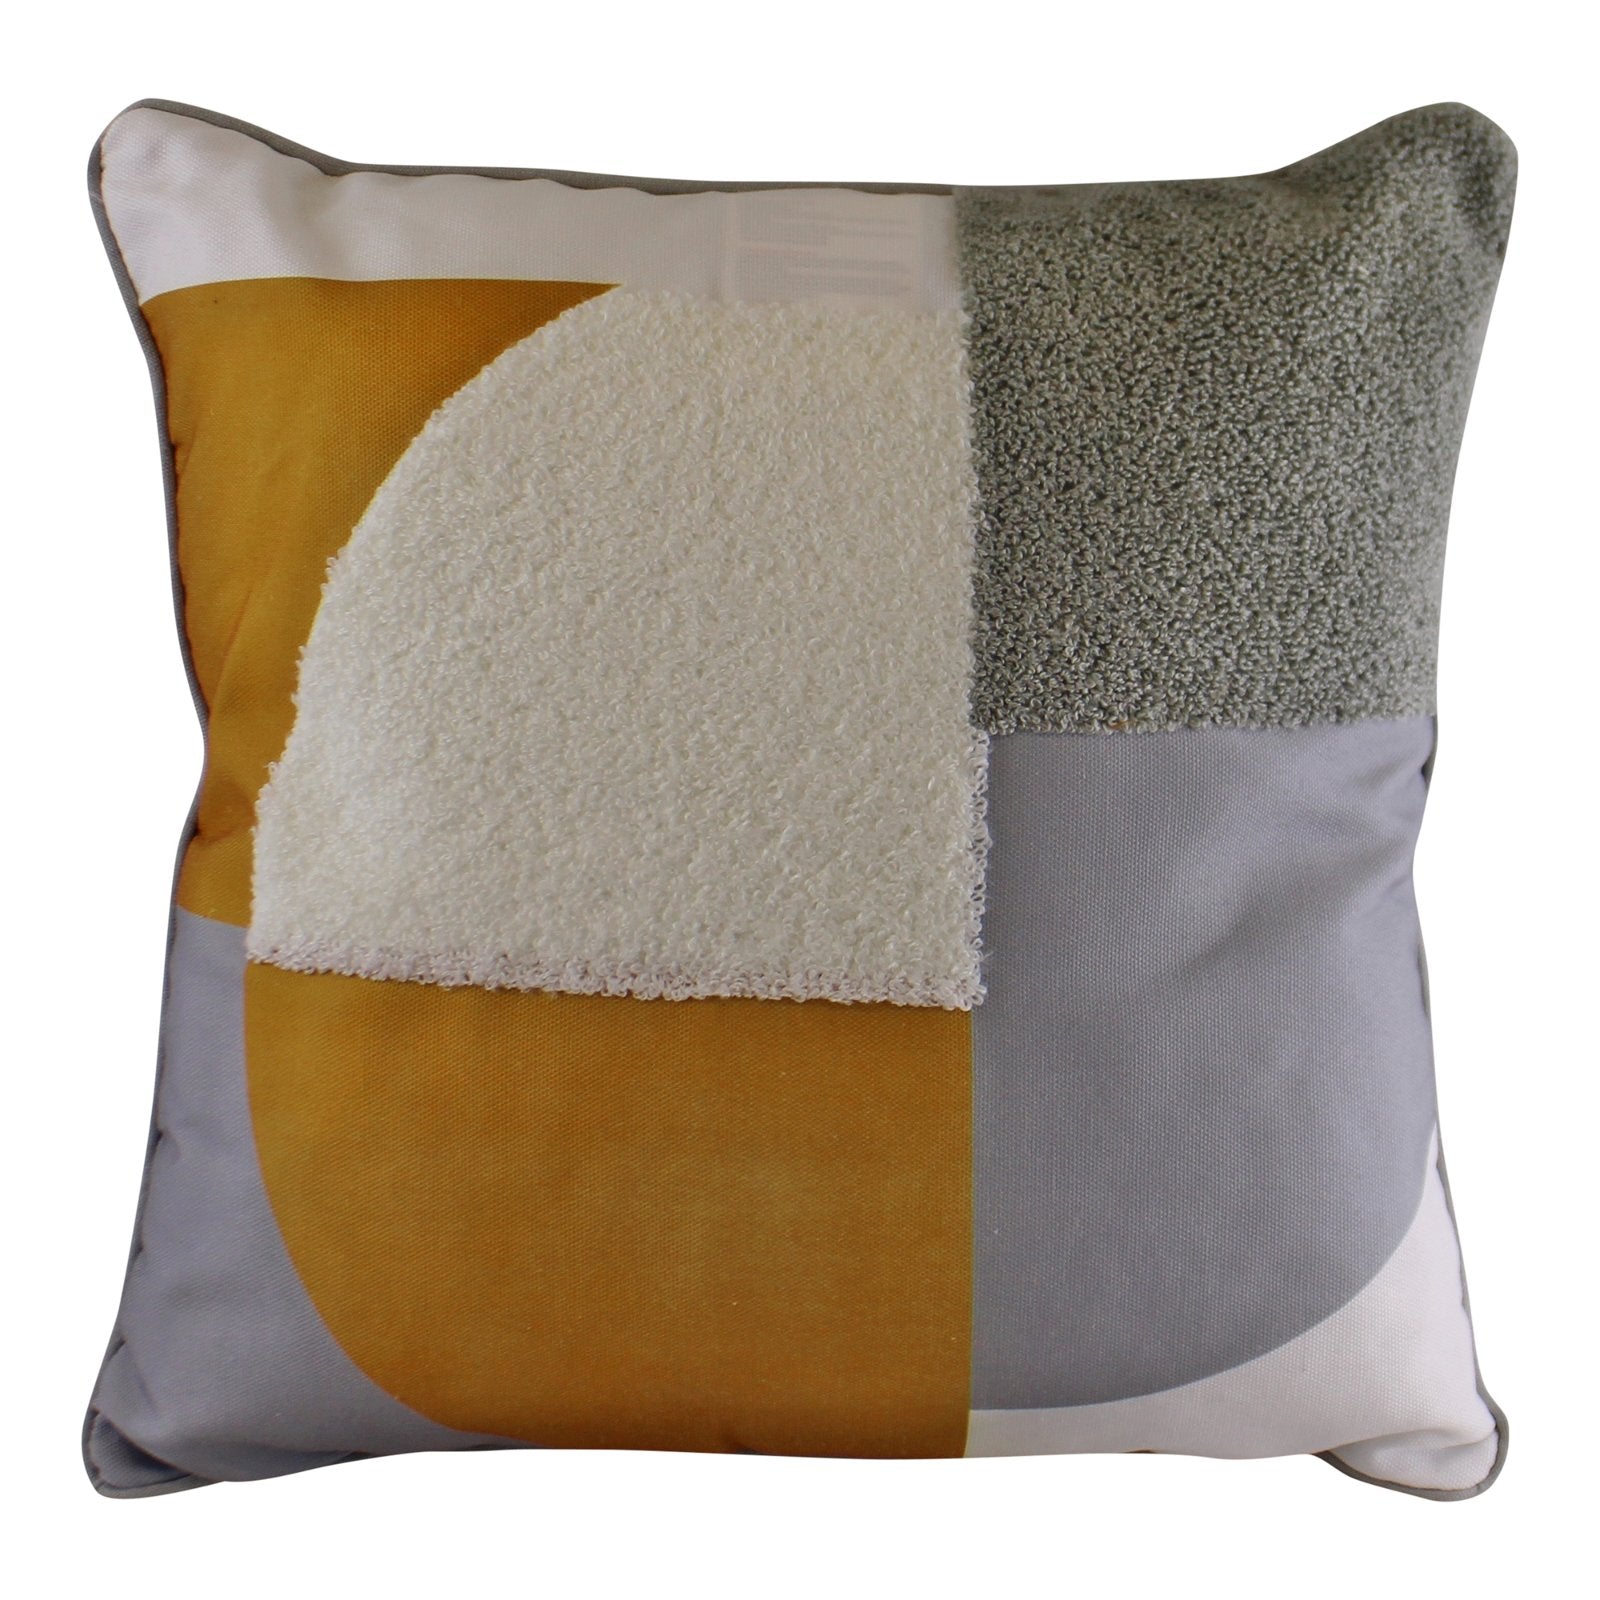 Abstract Design Textured Cushion, Design A - a Cheeky Plant